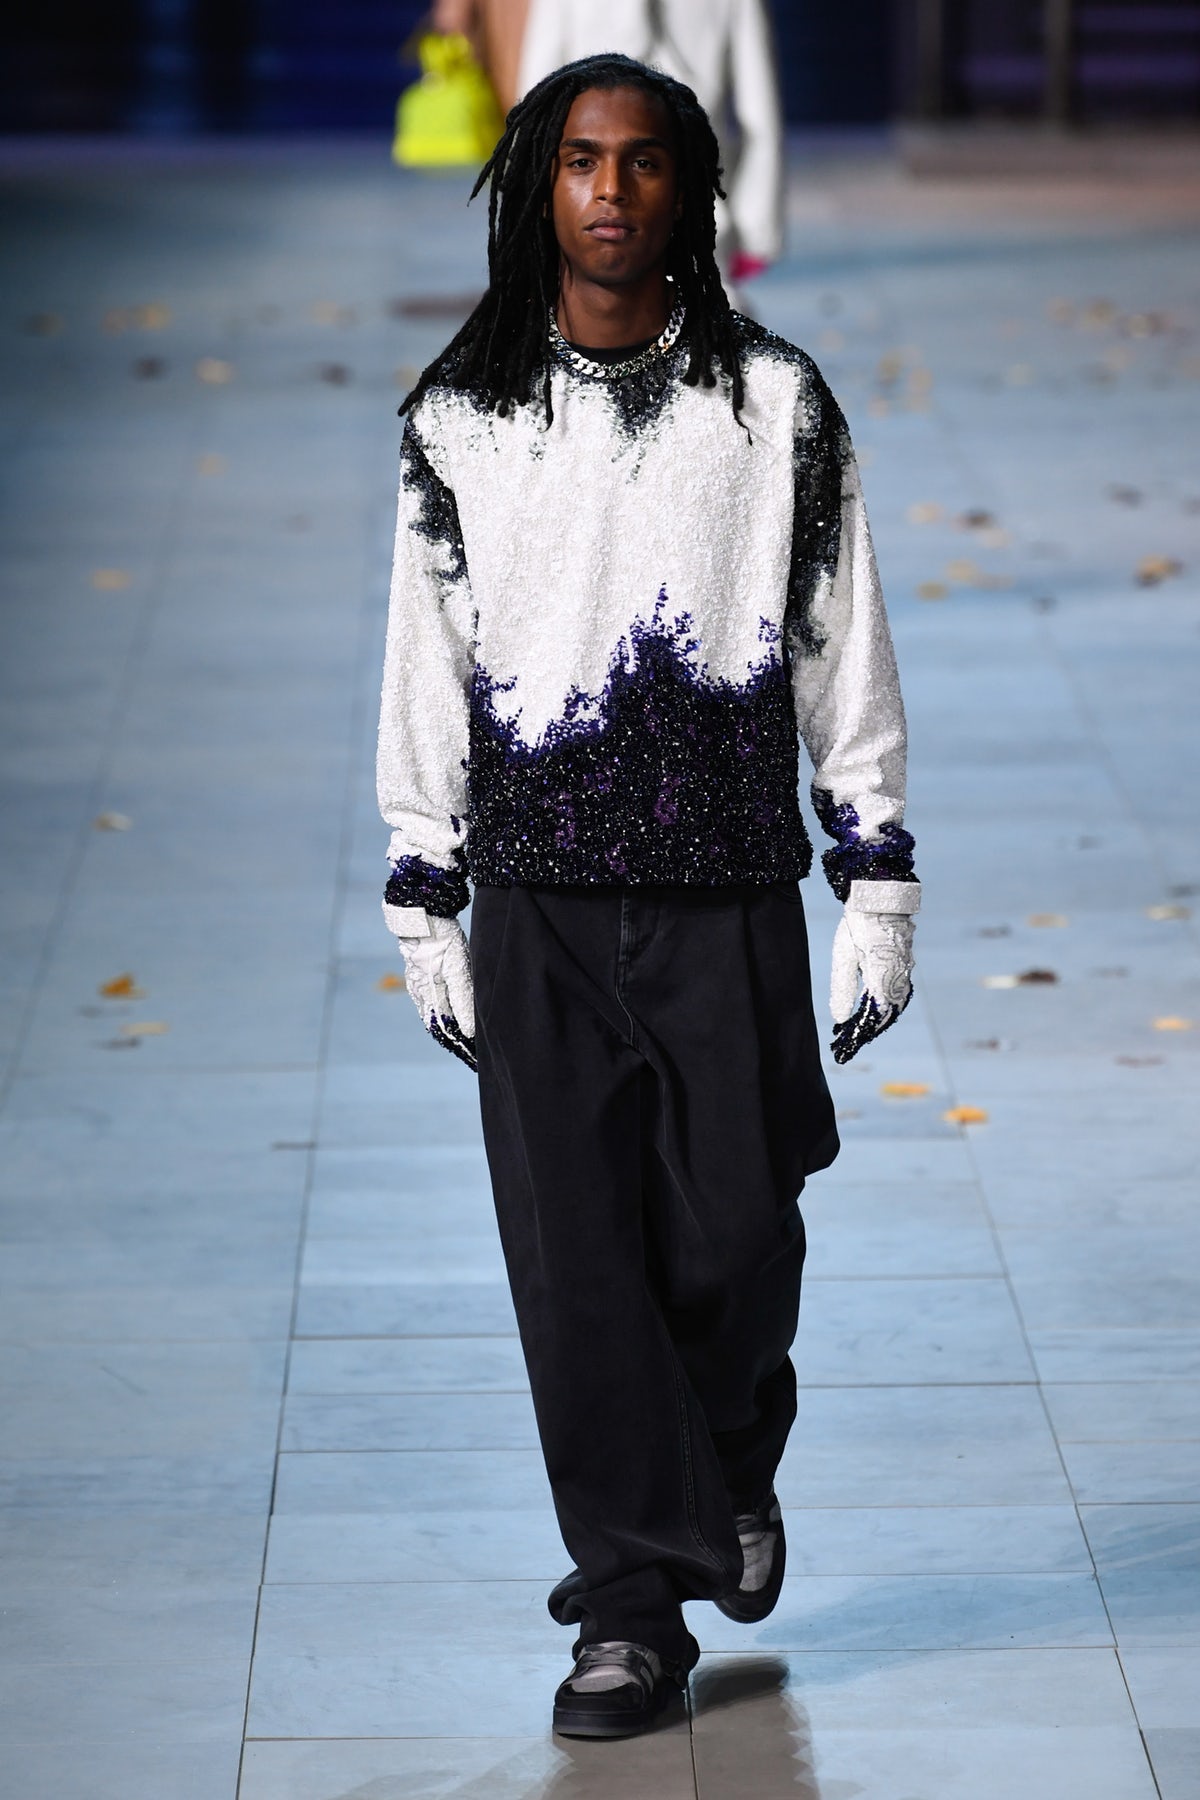 Michael Jackson as Muse? Louis Vuitton Has Some Explaining to Do